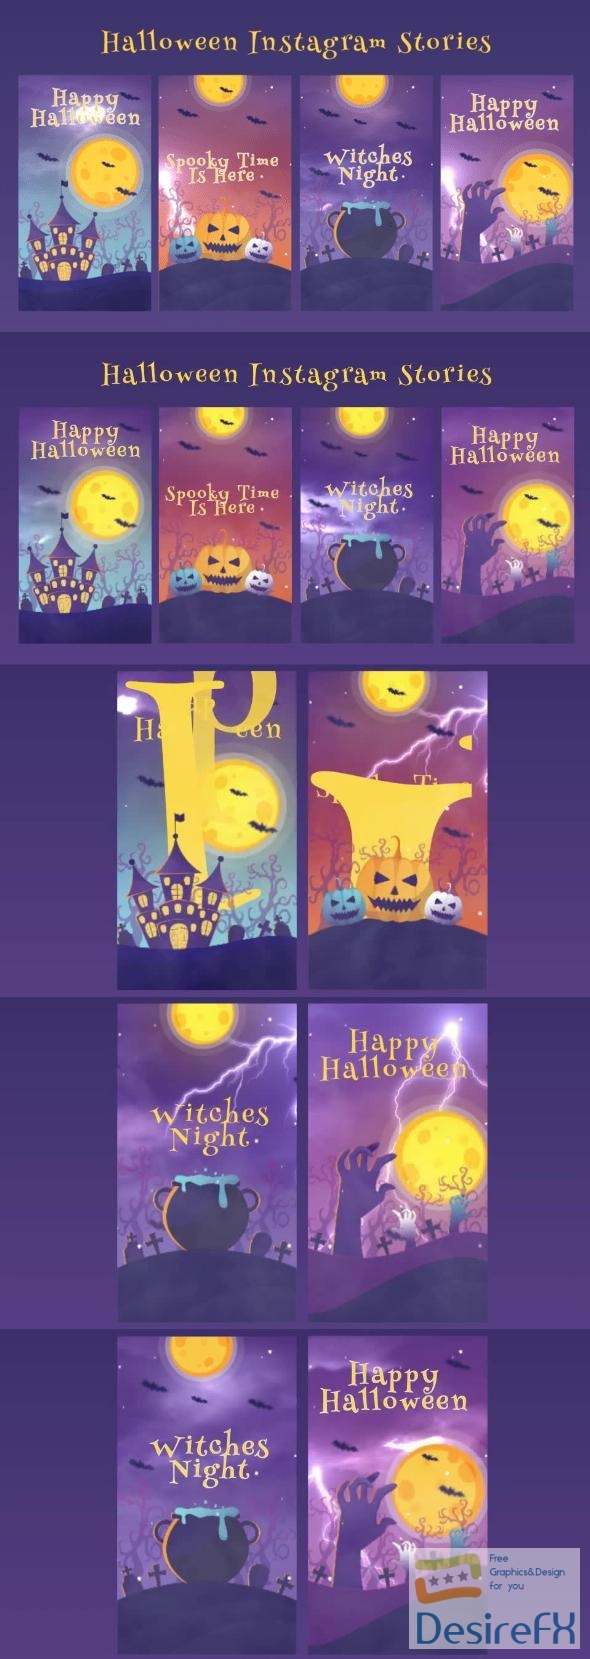 VideoHive Halloween Instagram Stories 47691142